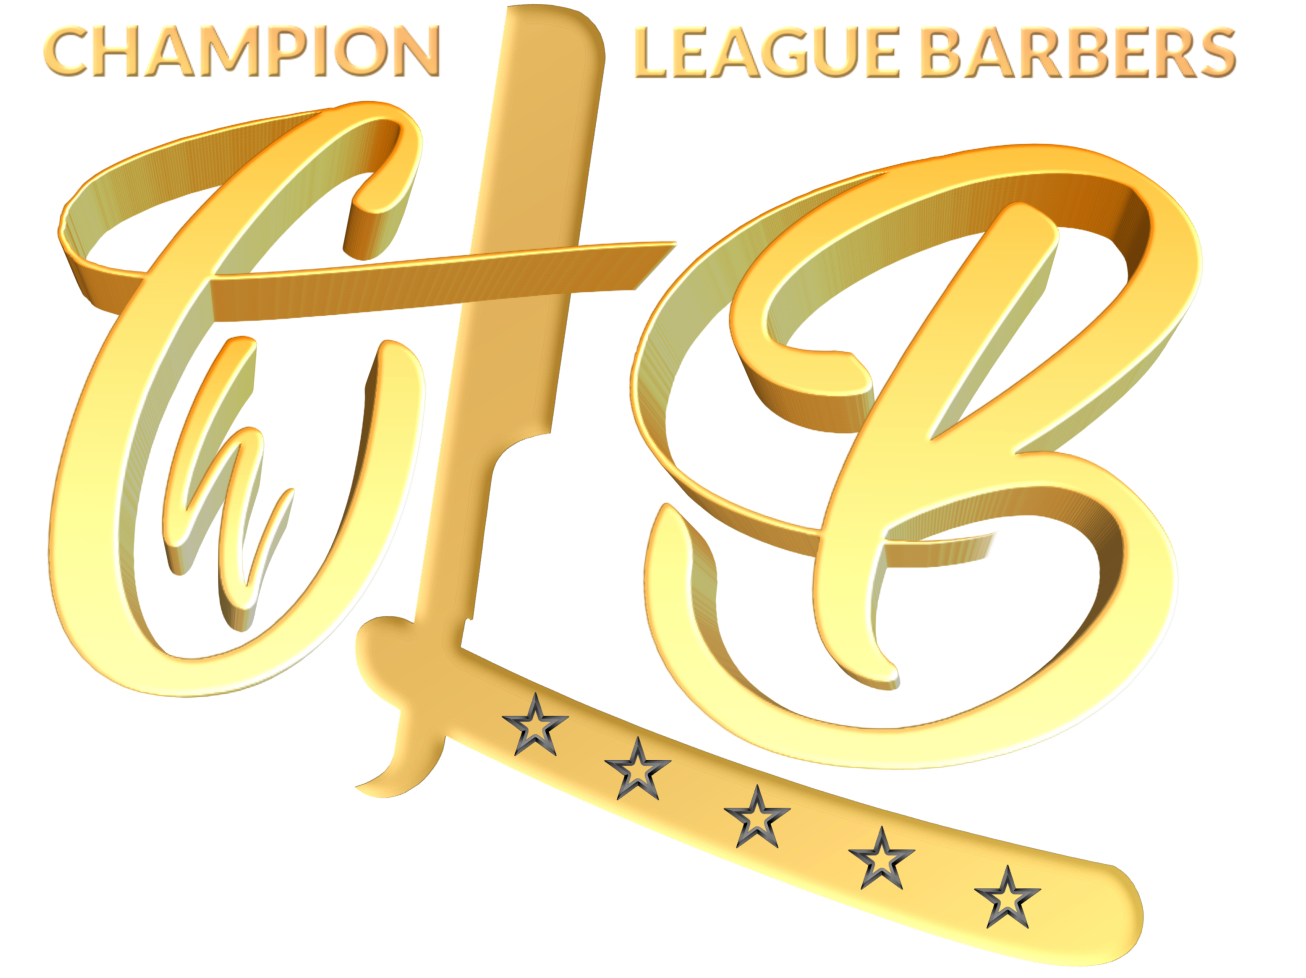 Champion League Barber Academy – Champion League Barbers